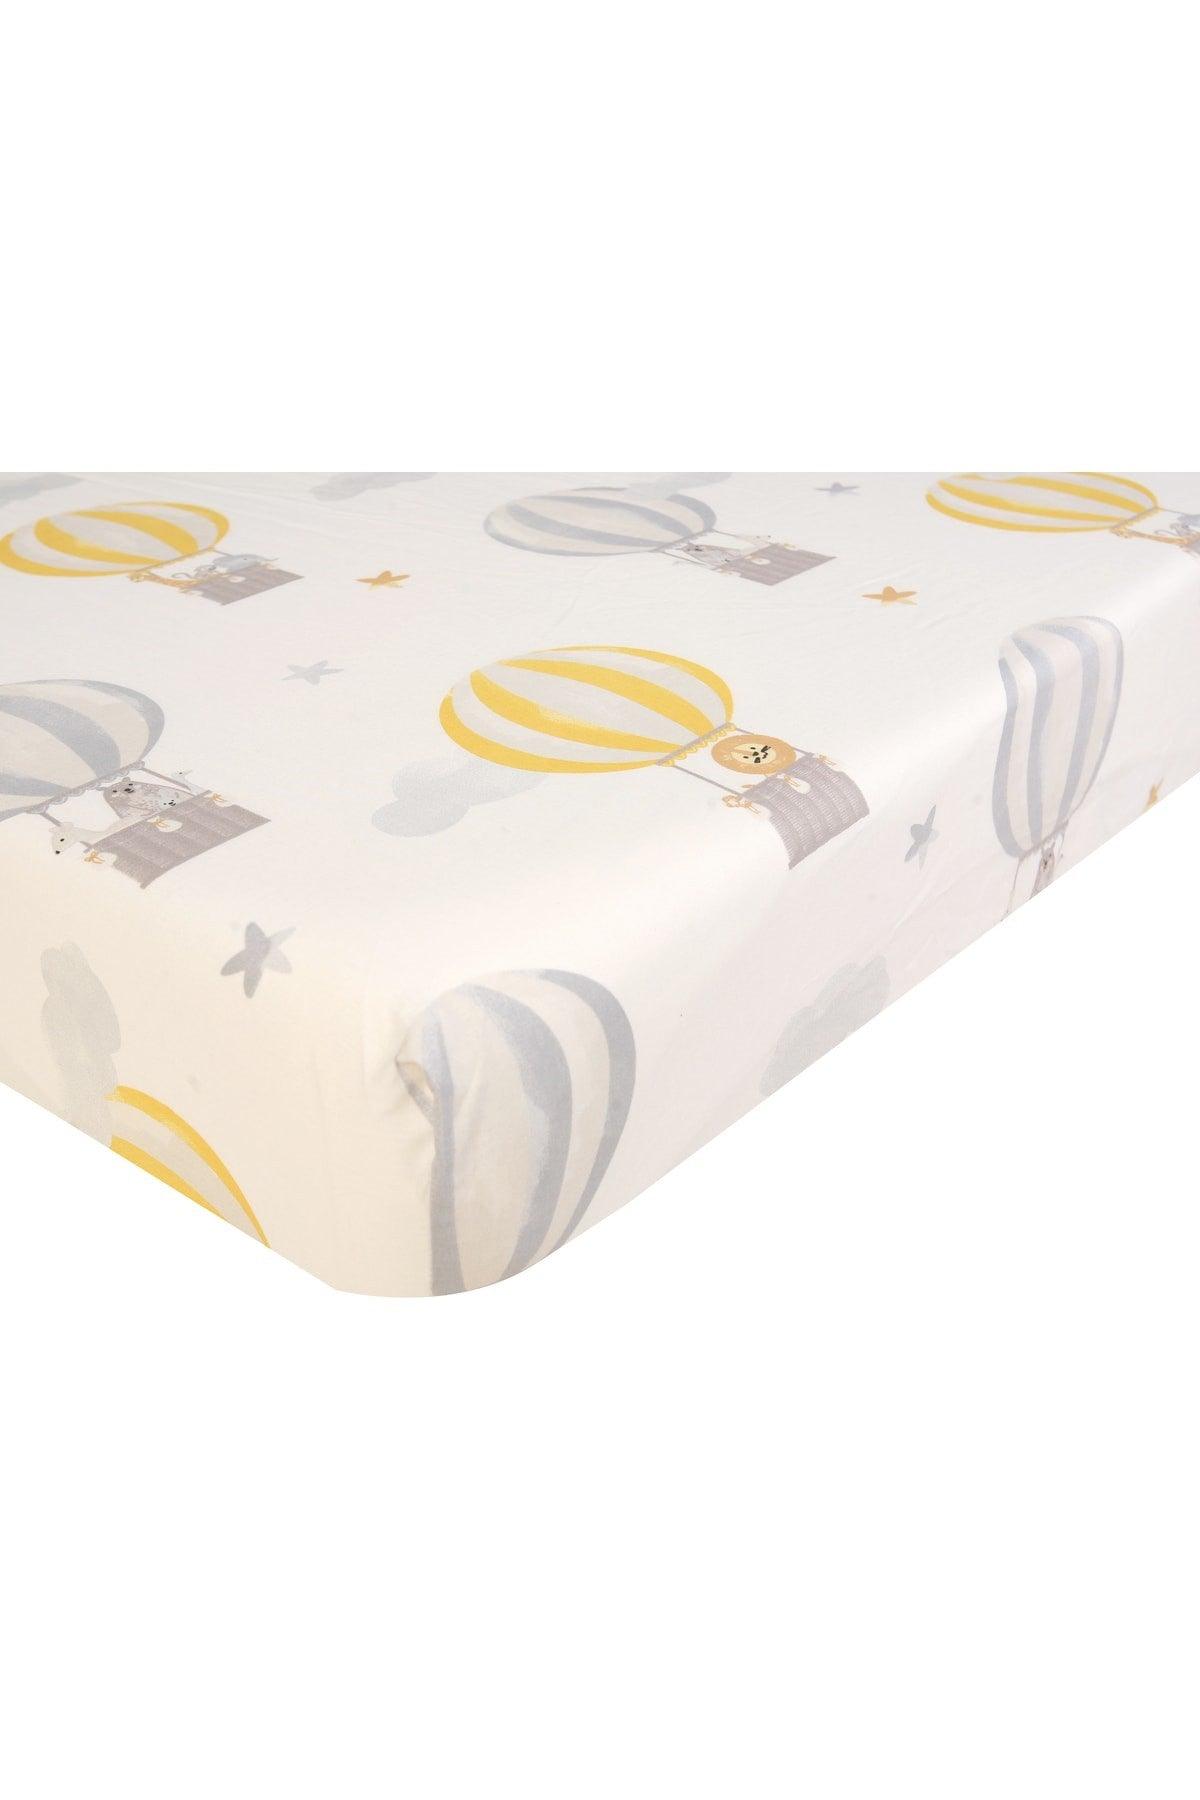 Park Mattress Elastic Bed Sheet Set Balloon Pattern 70x110 Cm. And Pillowcase 35x45 Cm - Swordslife